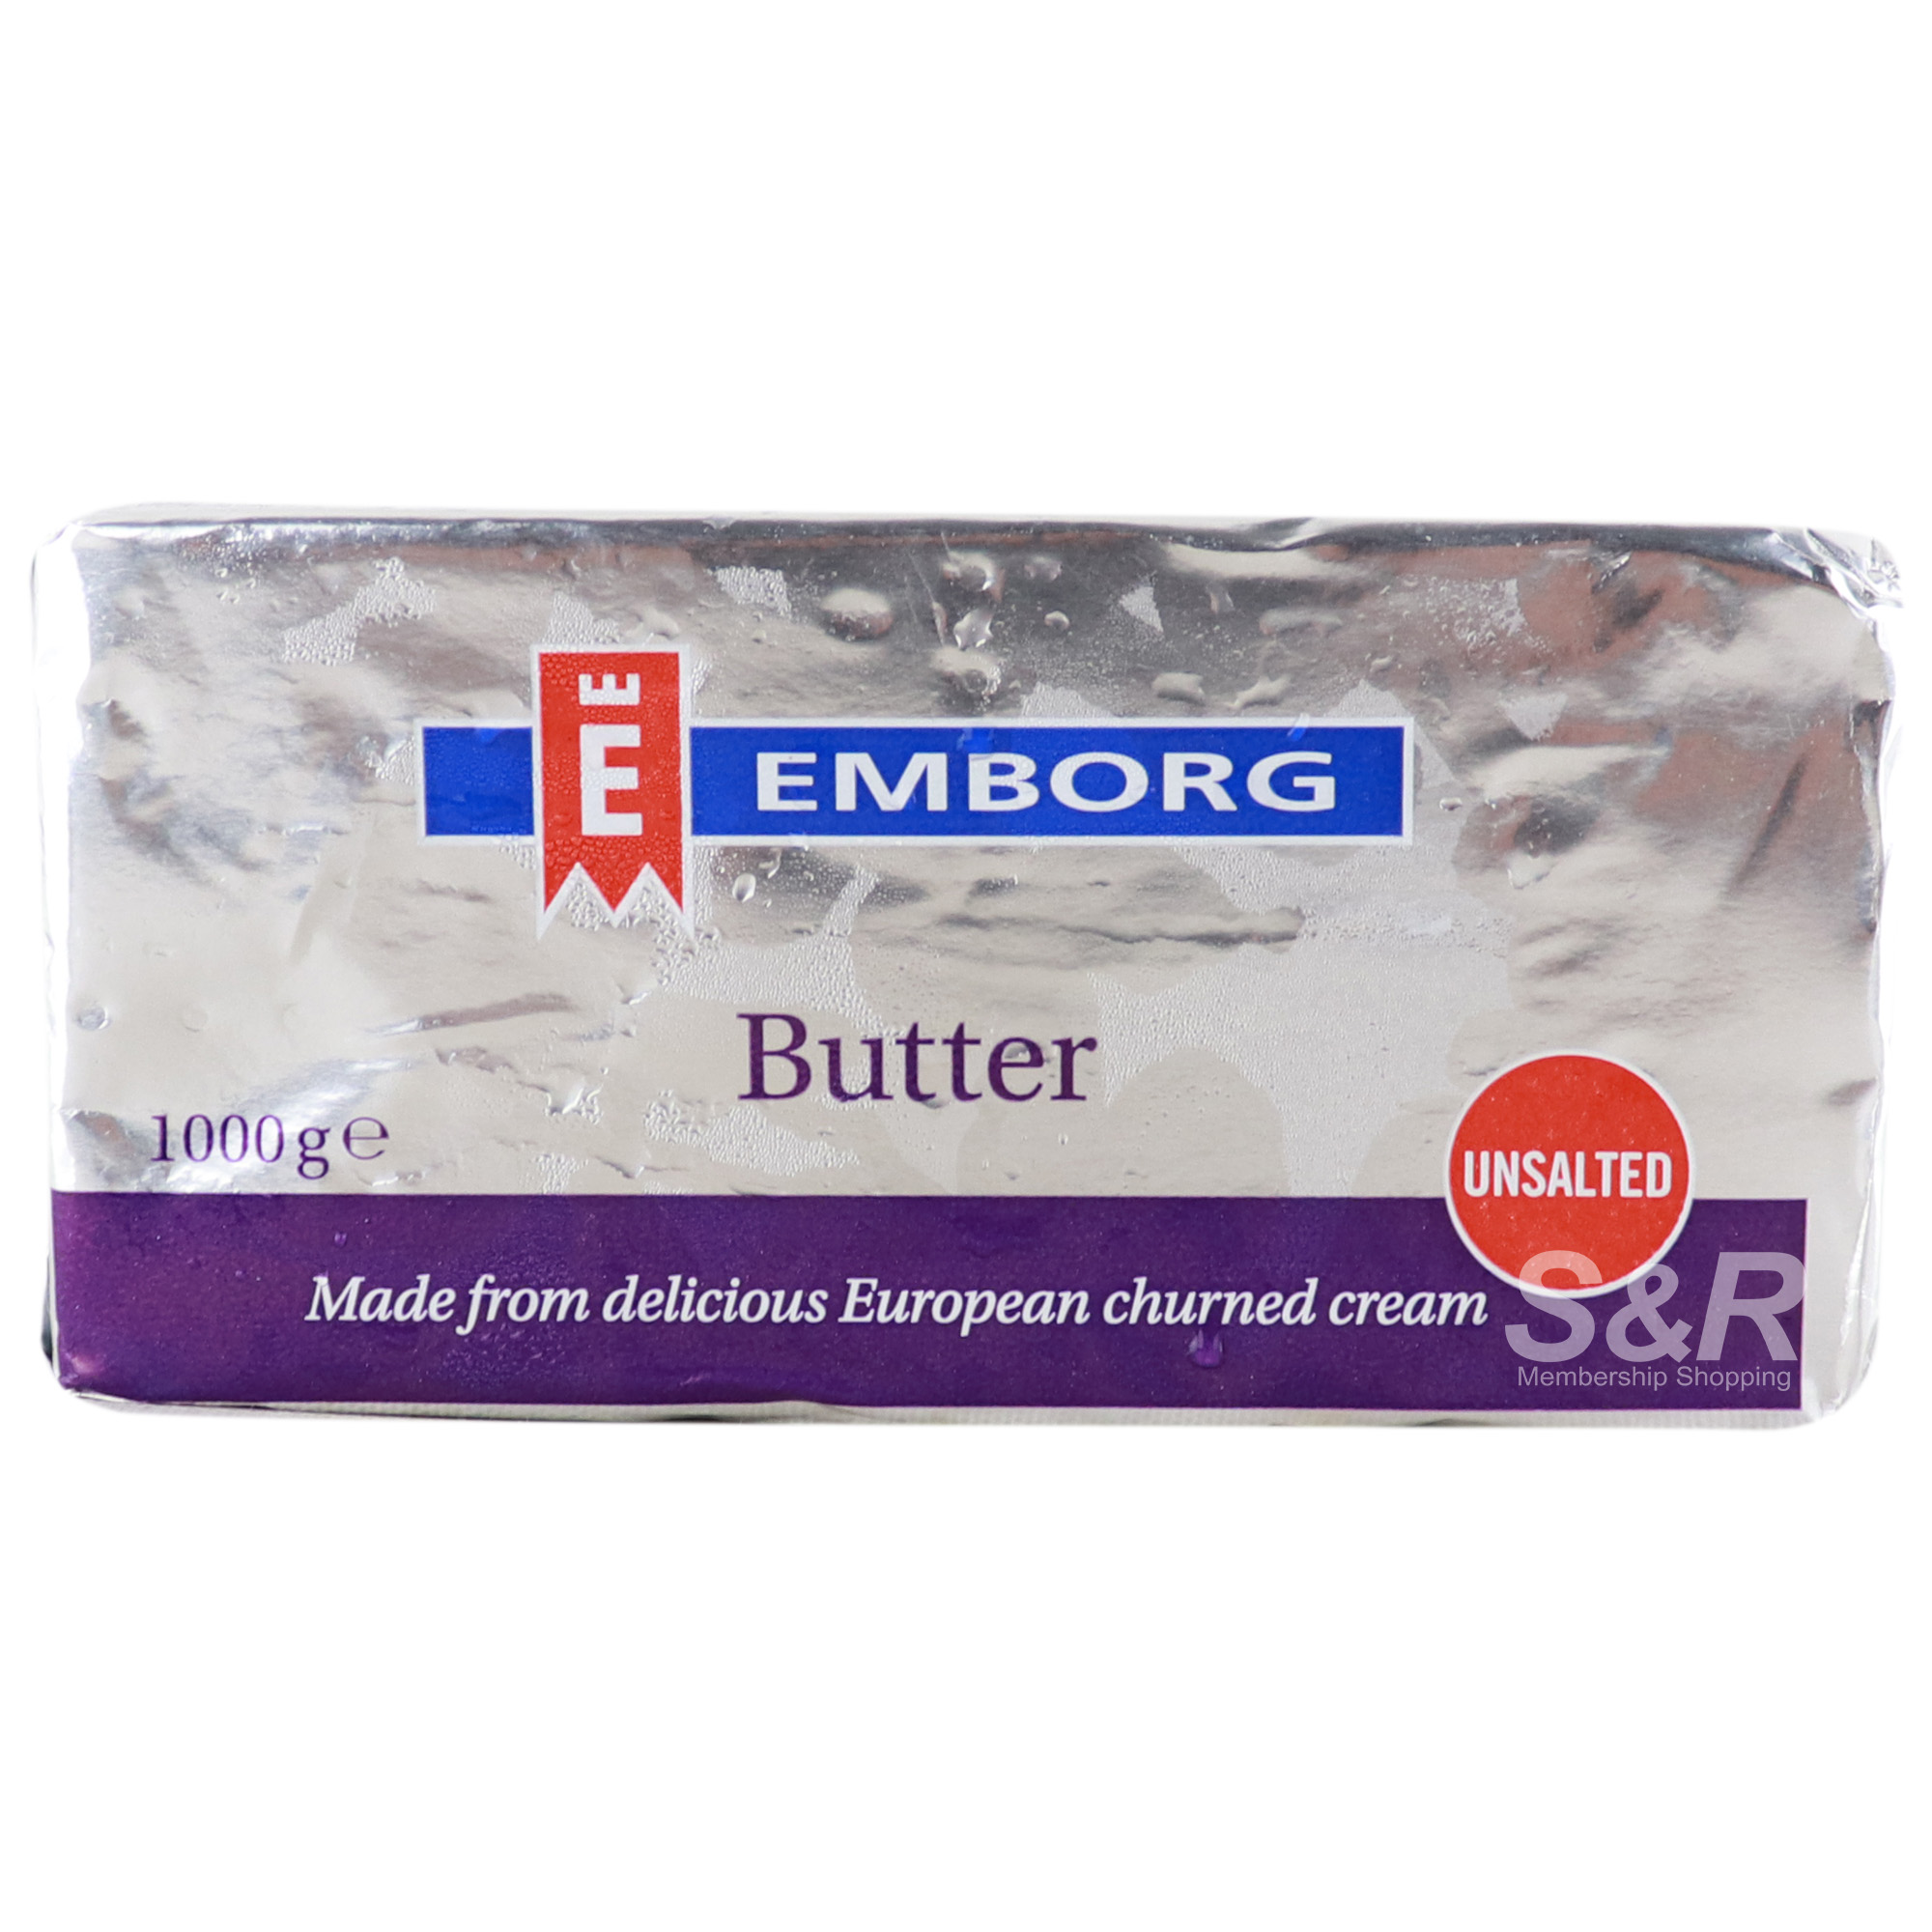 Emborg Unsalted Butter 1000g